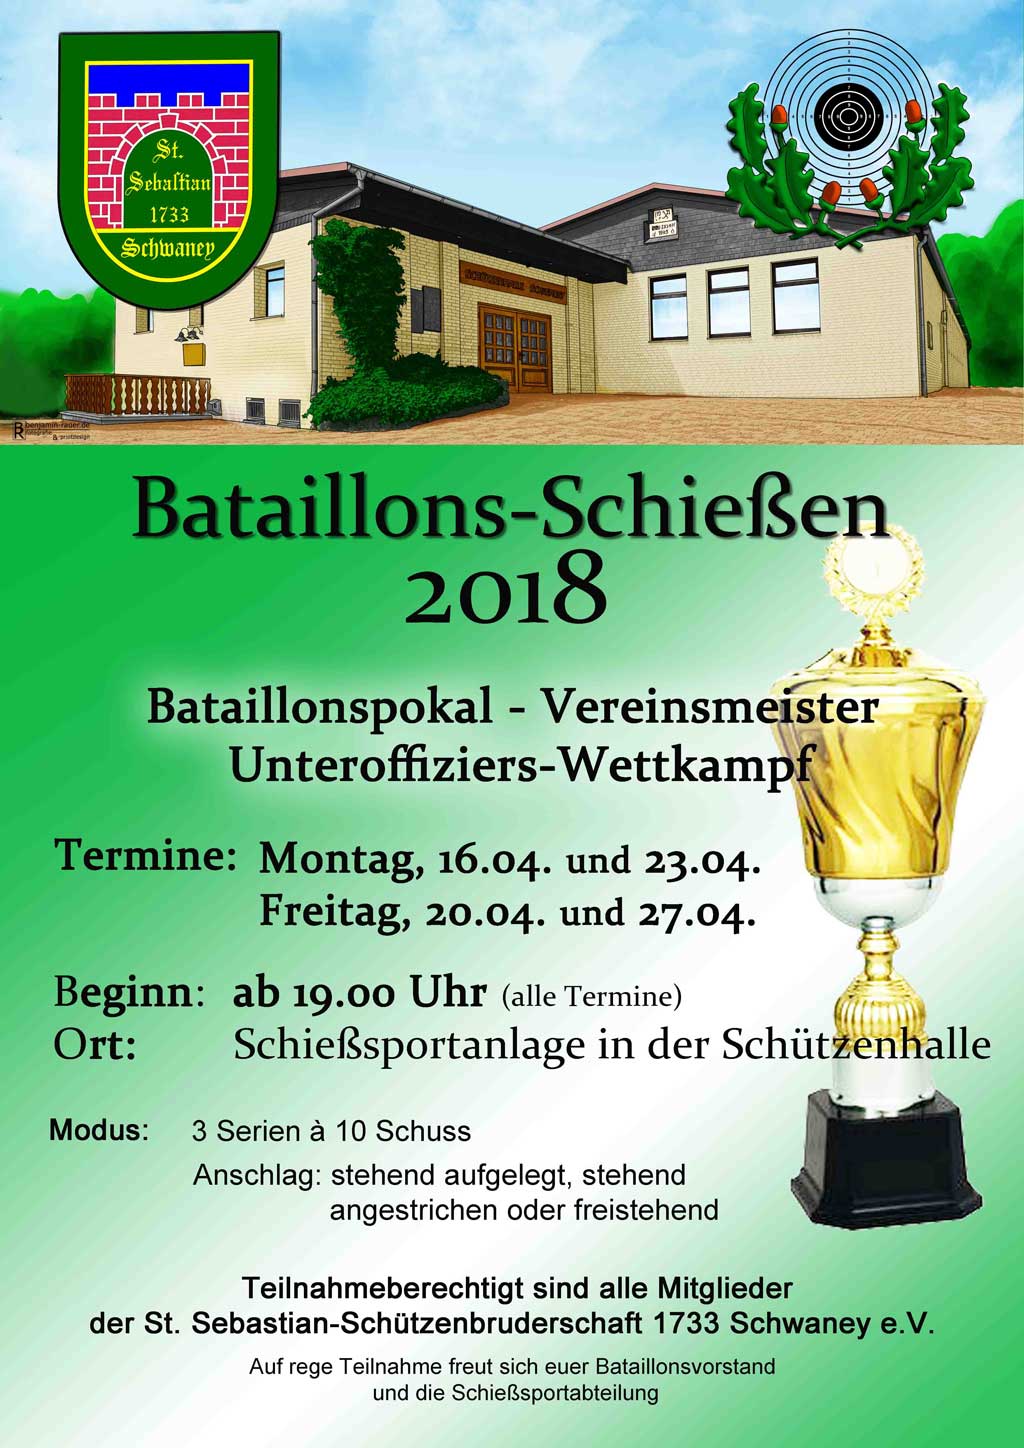 Bataillonsschiessen 2018